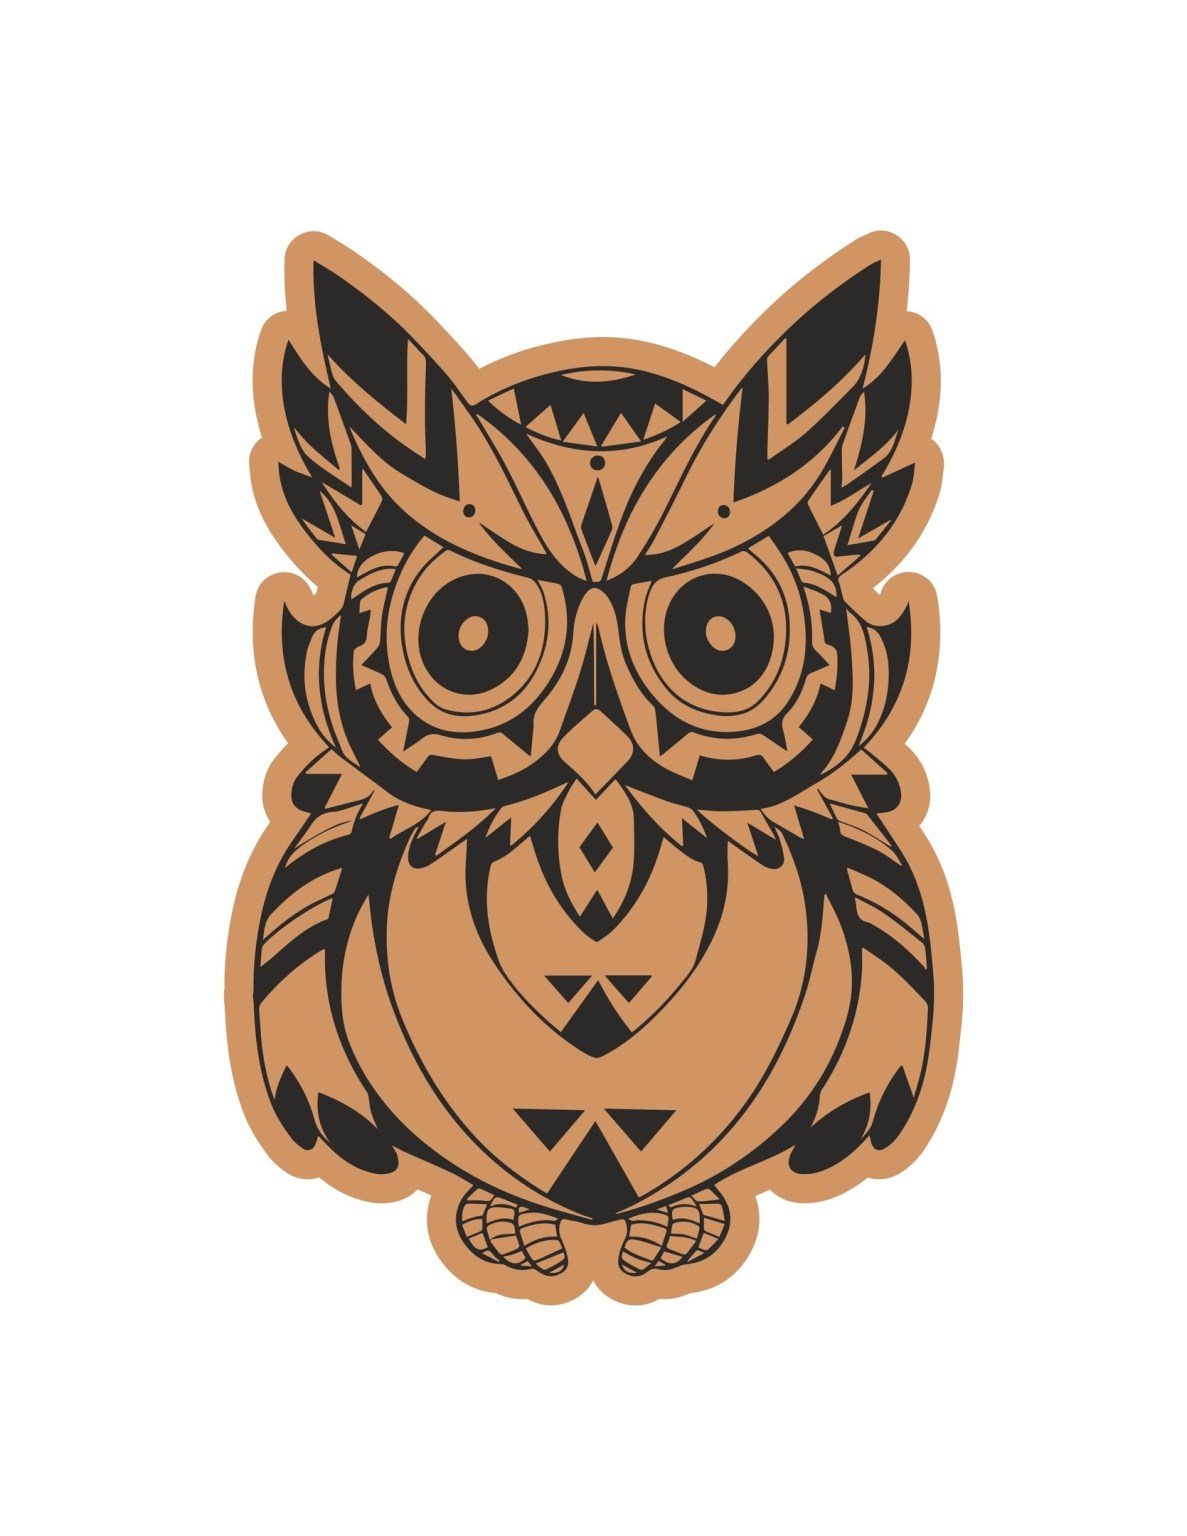 Cute Owl Laser Cut Engraving Template Free CDR Vectors Art